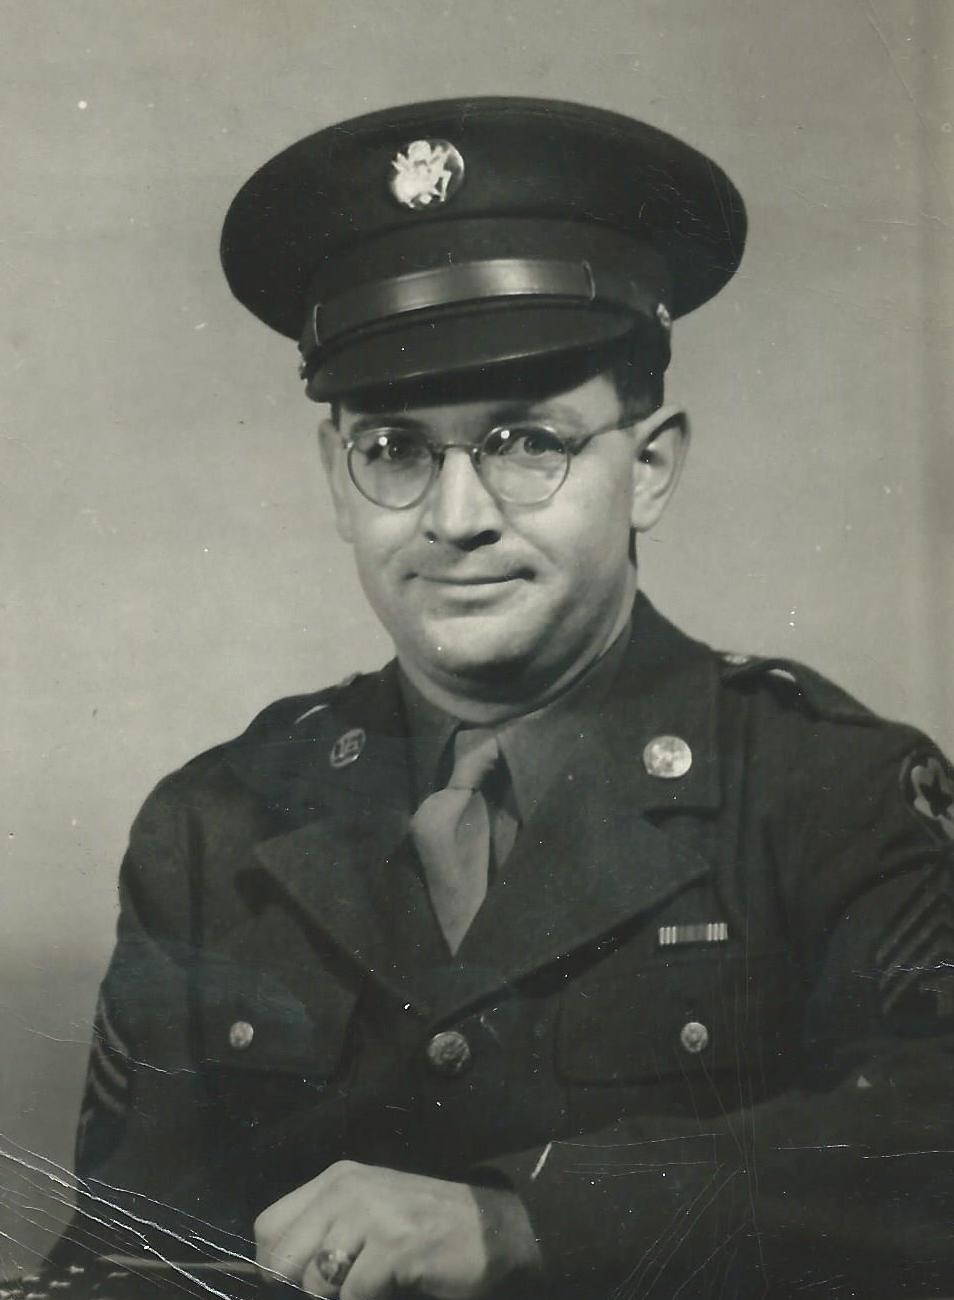 James McNitt in uniform